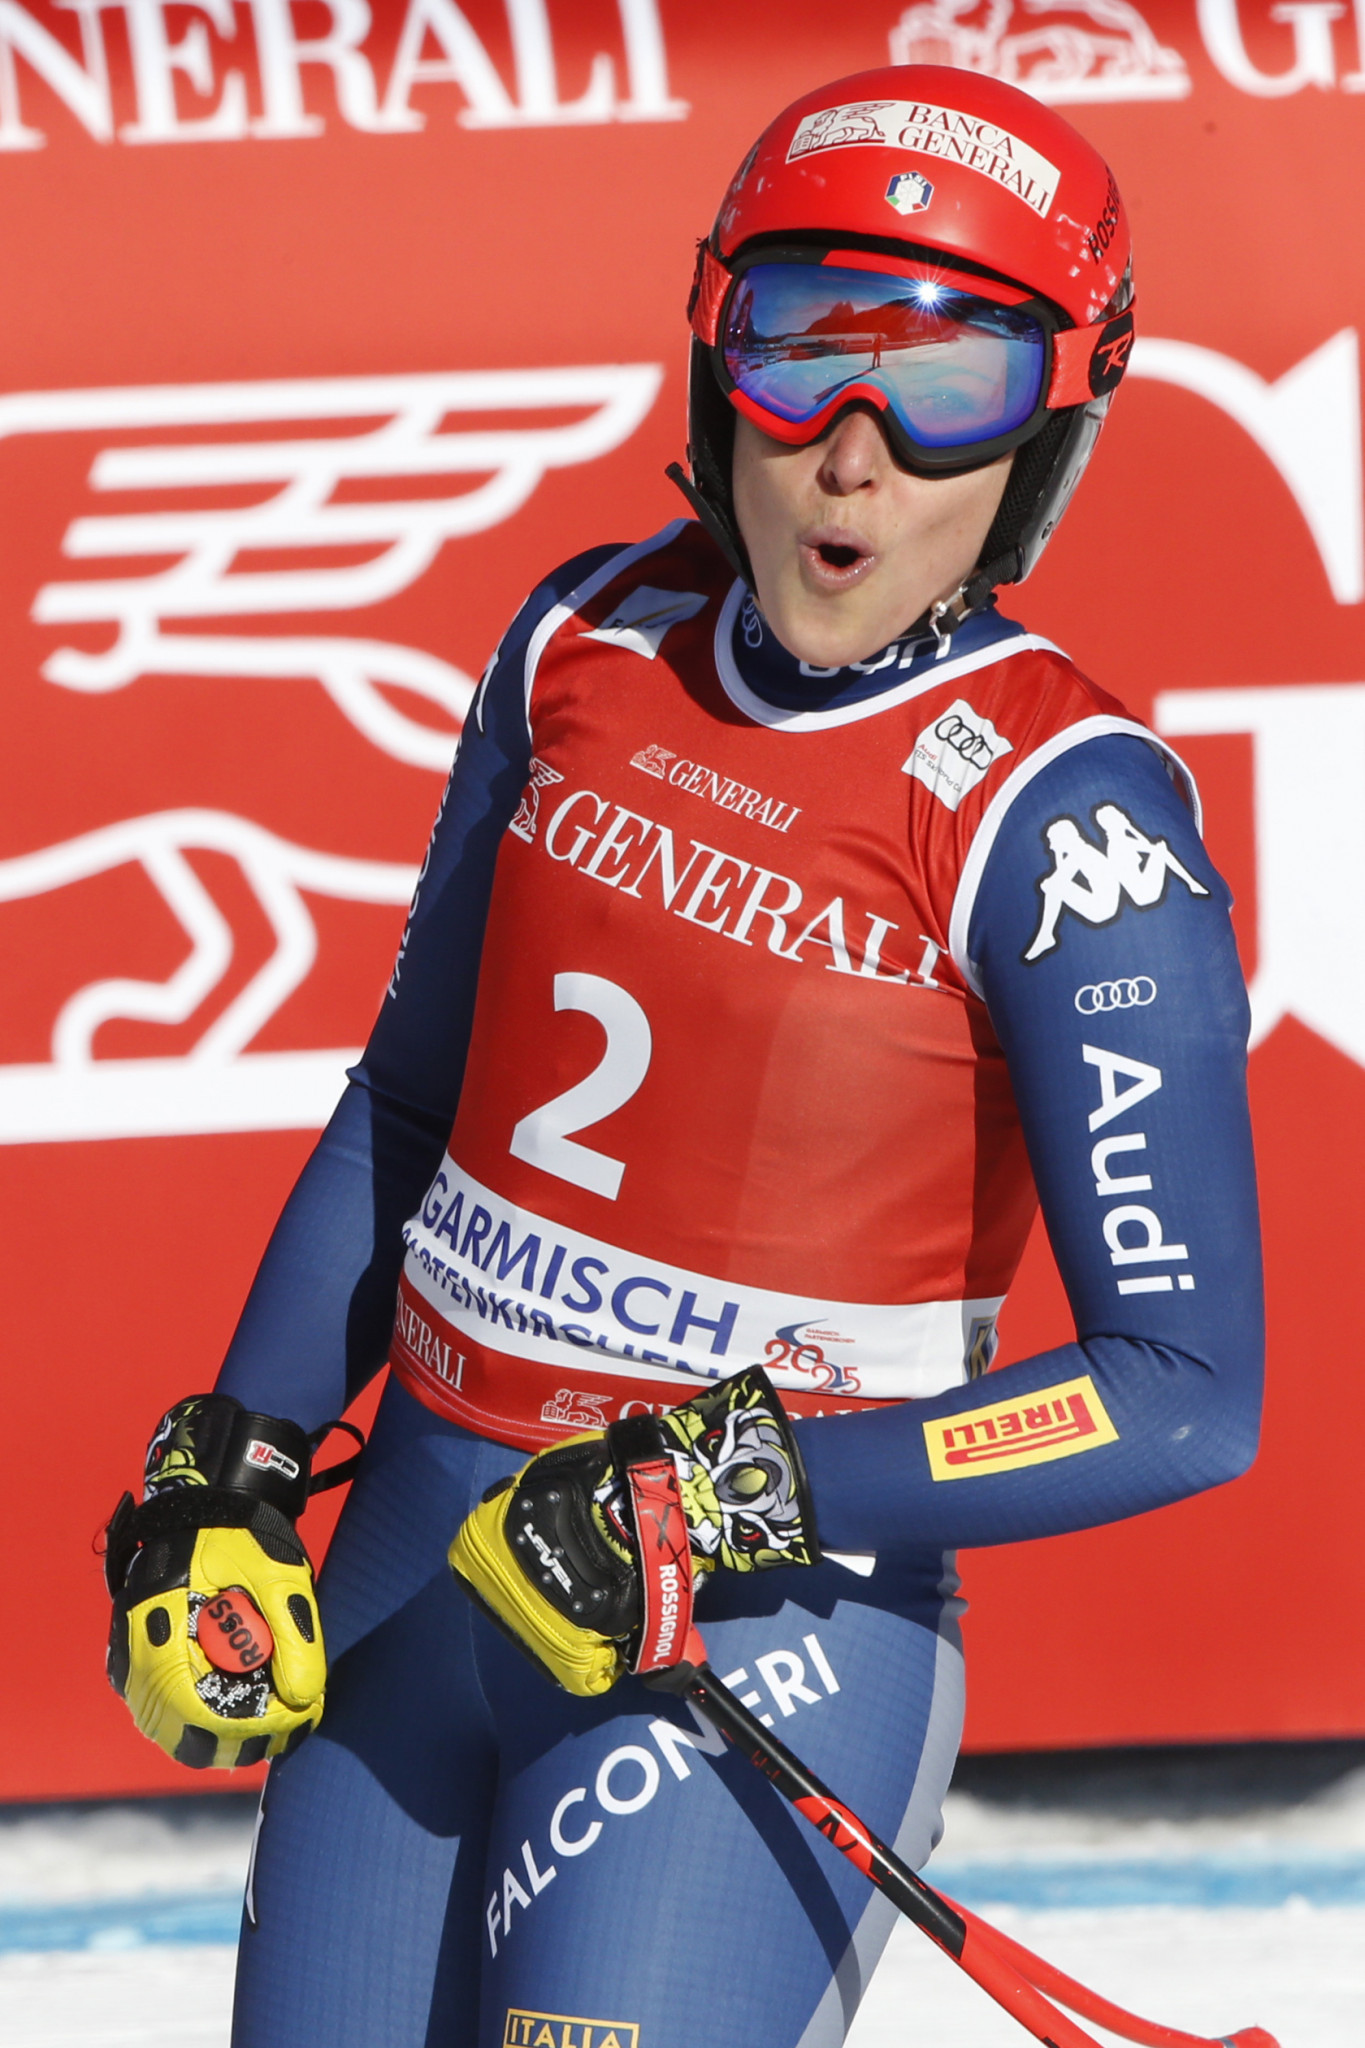 Federica Brignone reacts to finishing second in the FIS Alpine Ski World Cup in Garmisch-Partenkirchen ©Getty Images